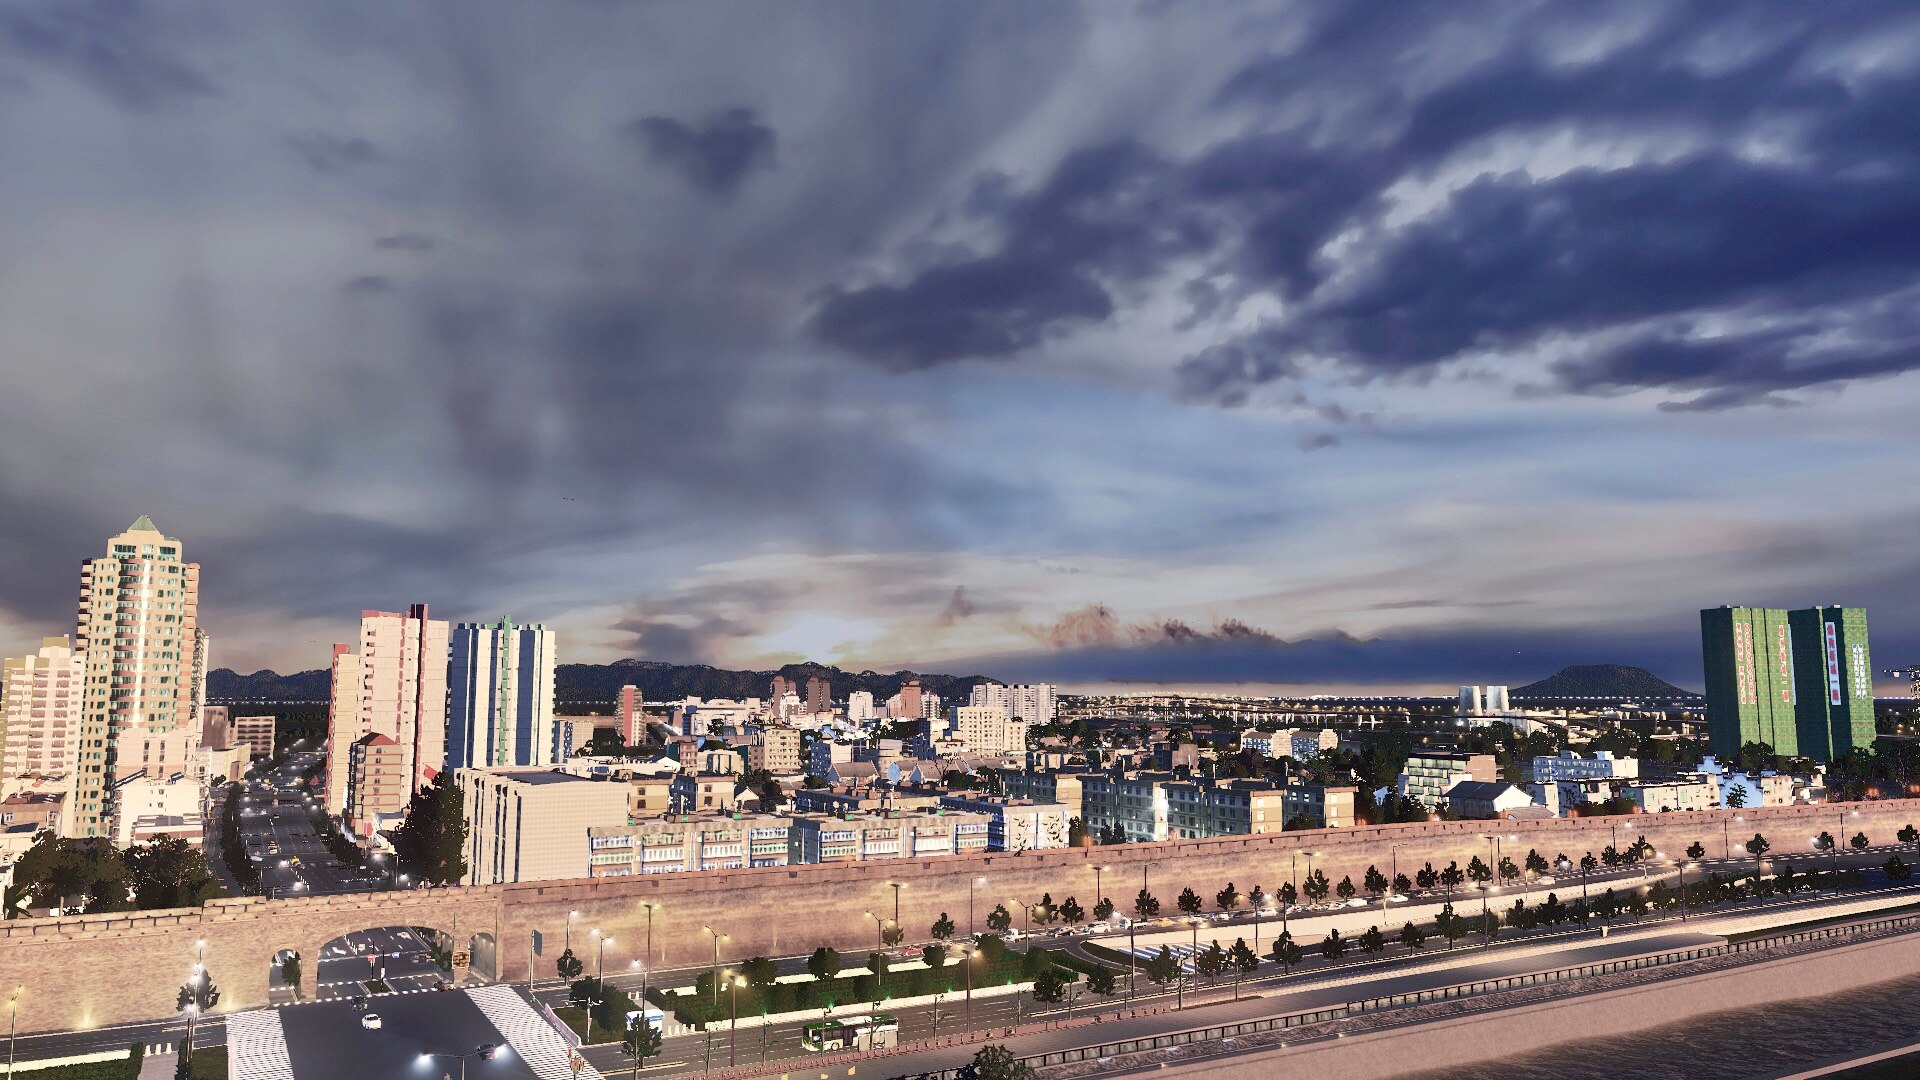 Atelier Steam::CitiesSkylines: Nanking3.0 Reborn Assets